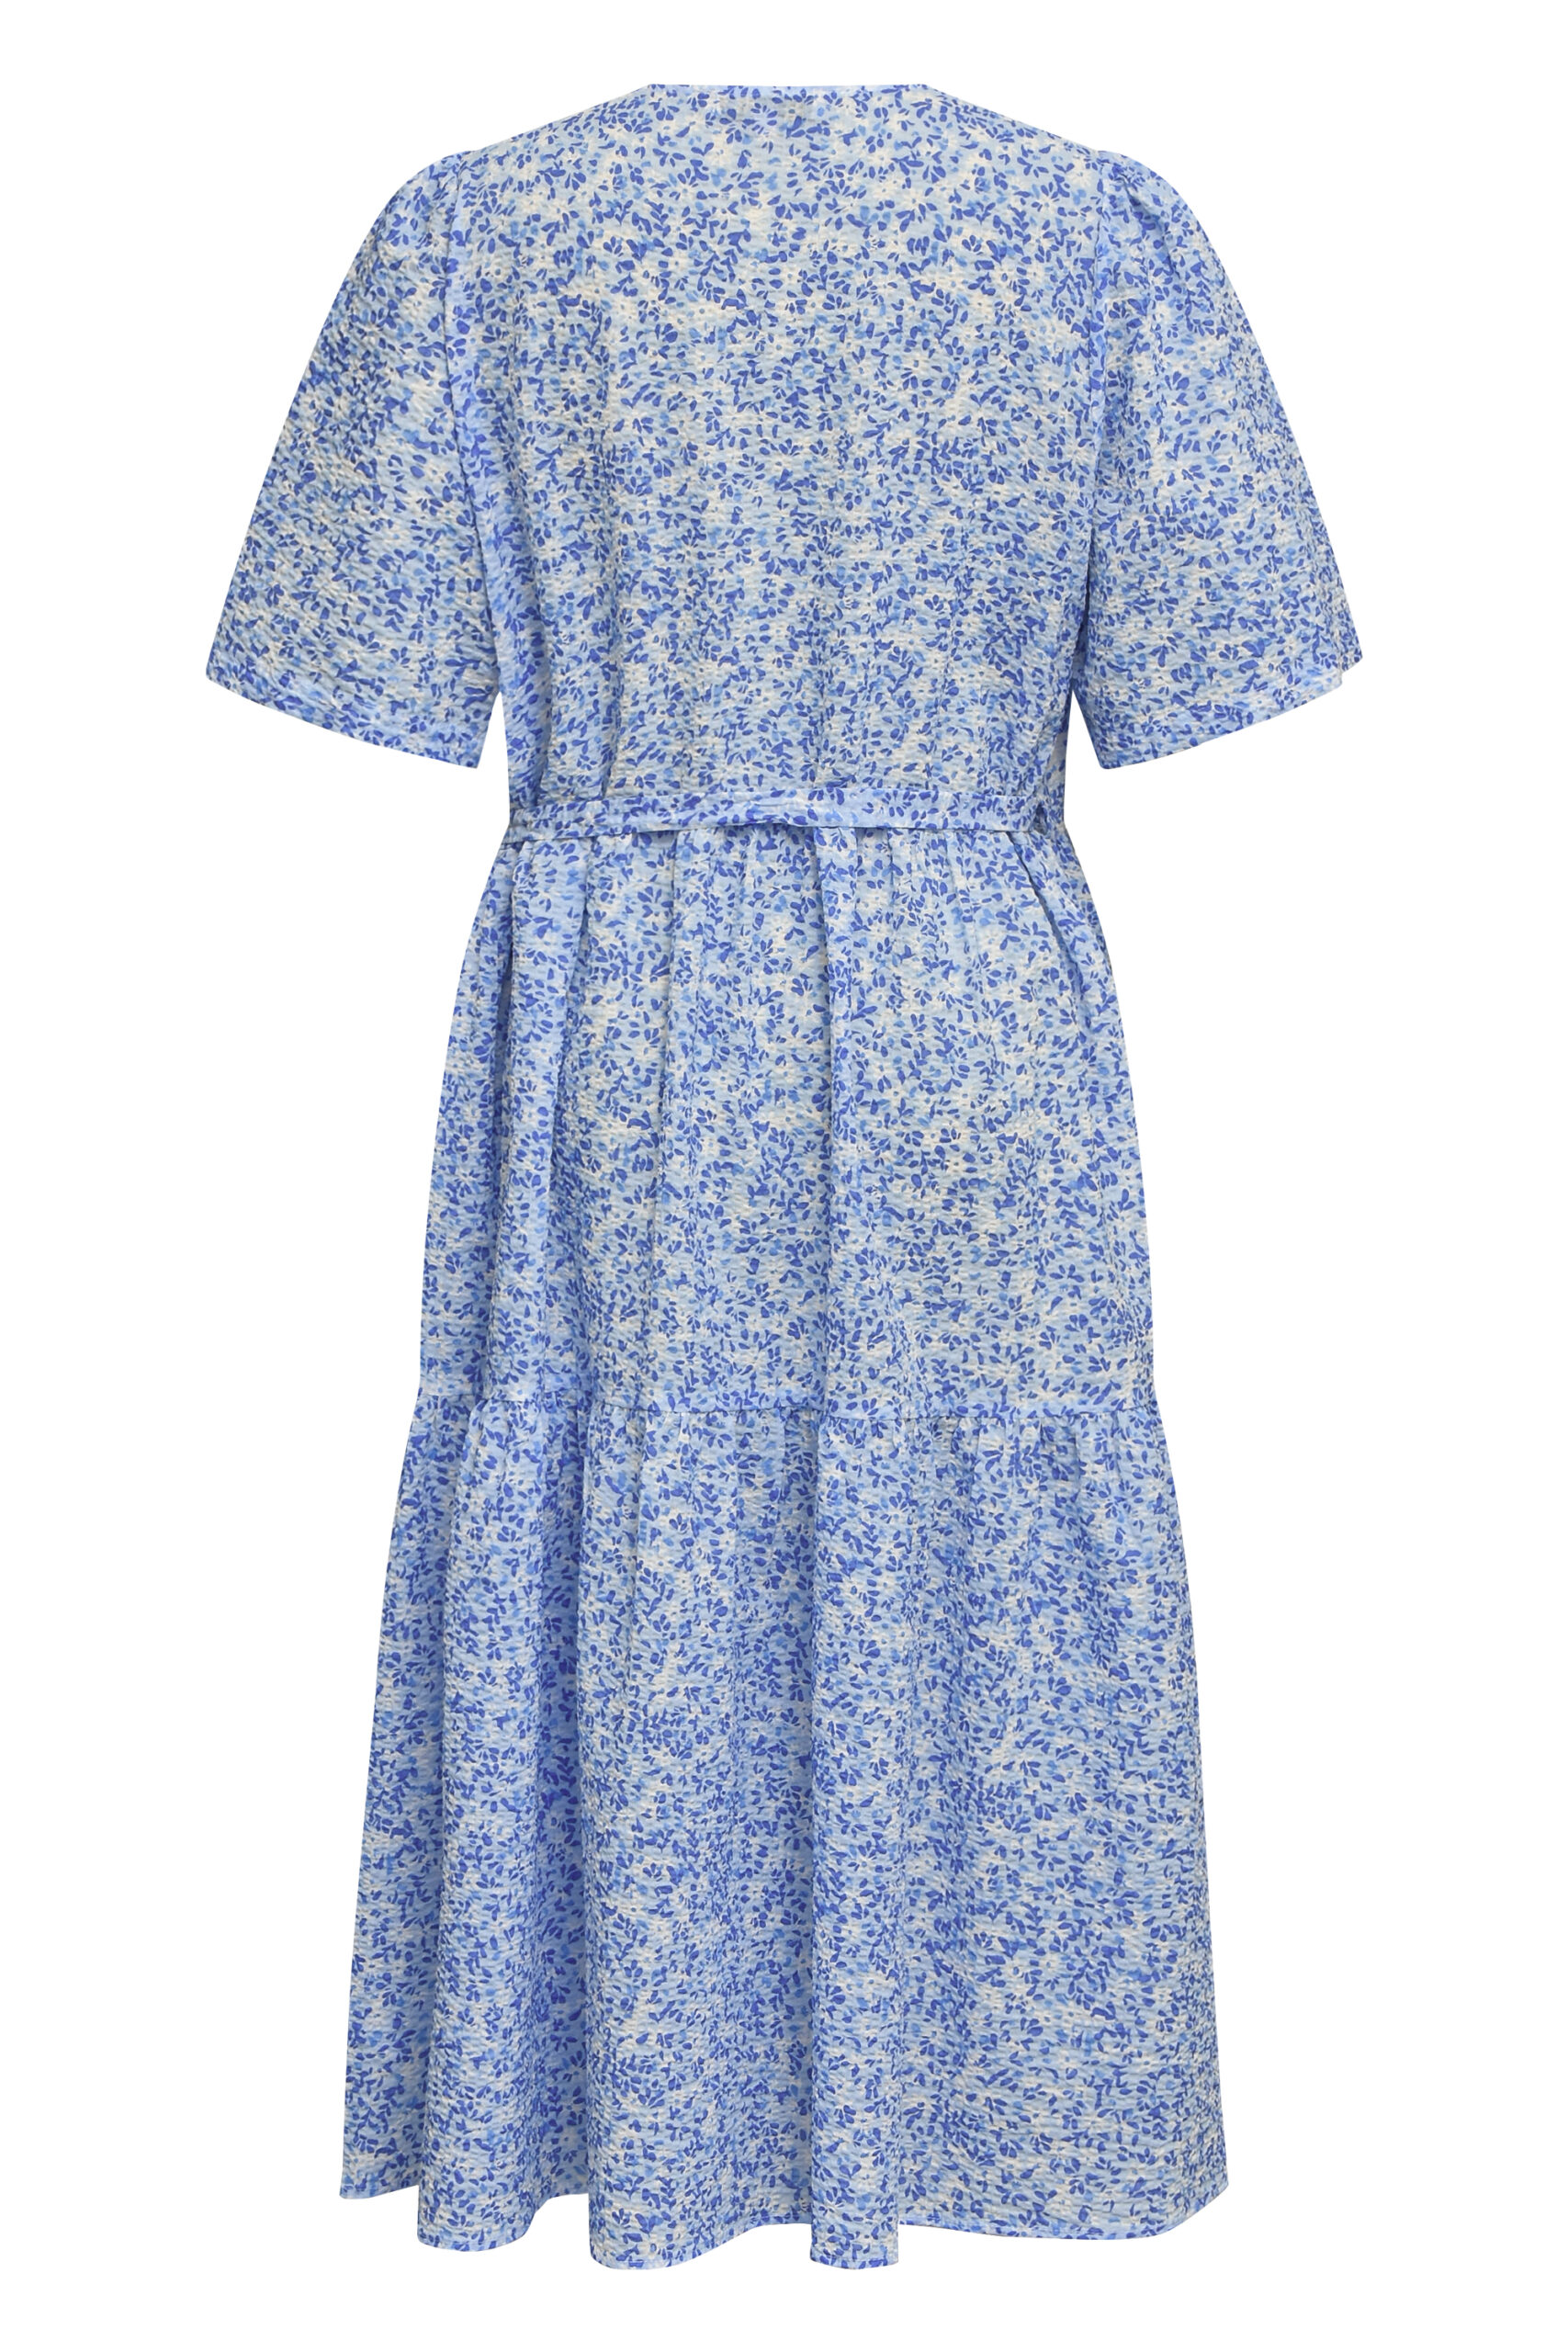 Caisa Blue Print Dress item back